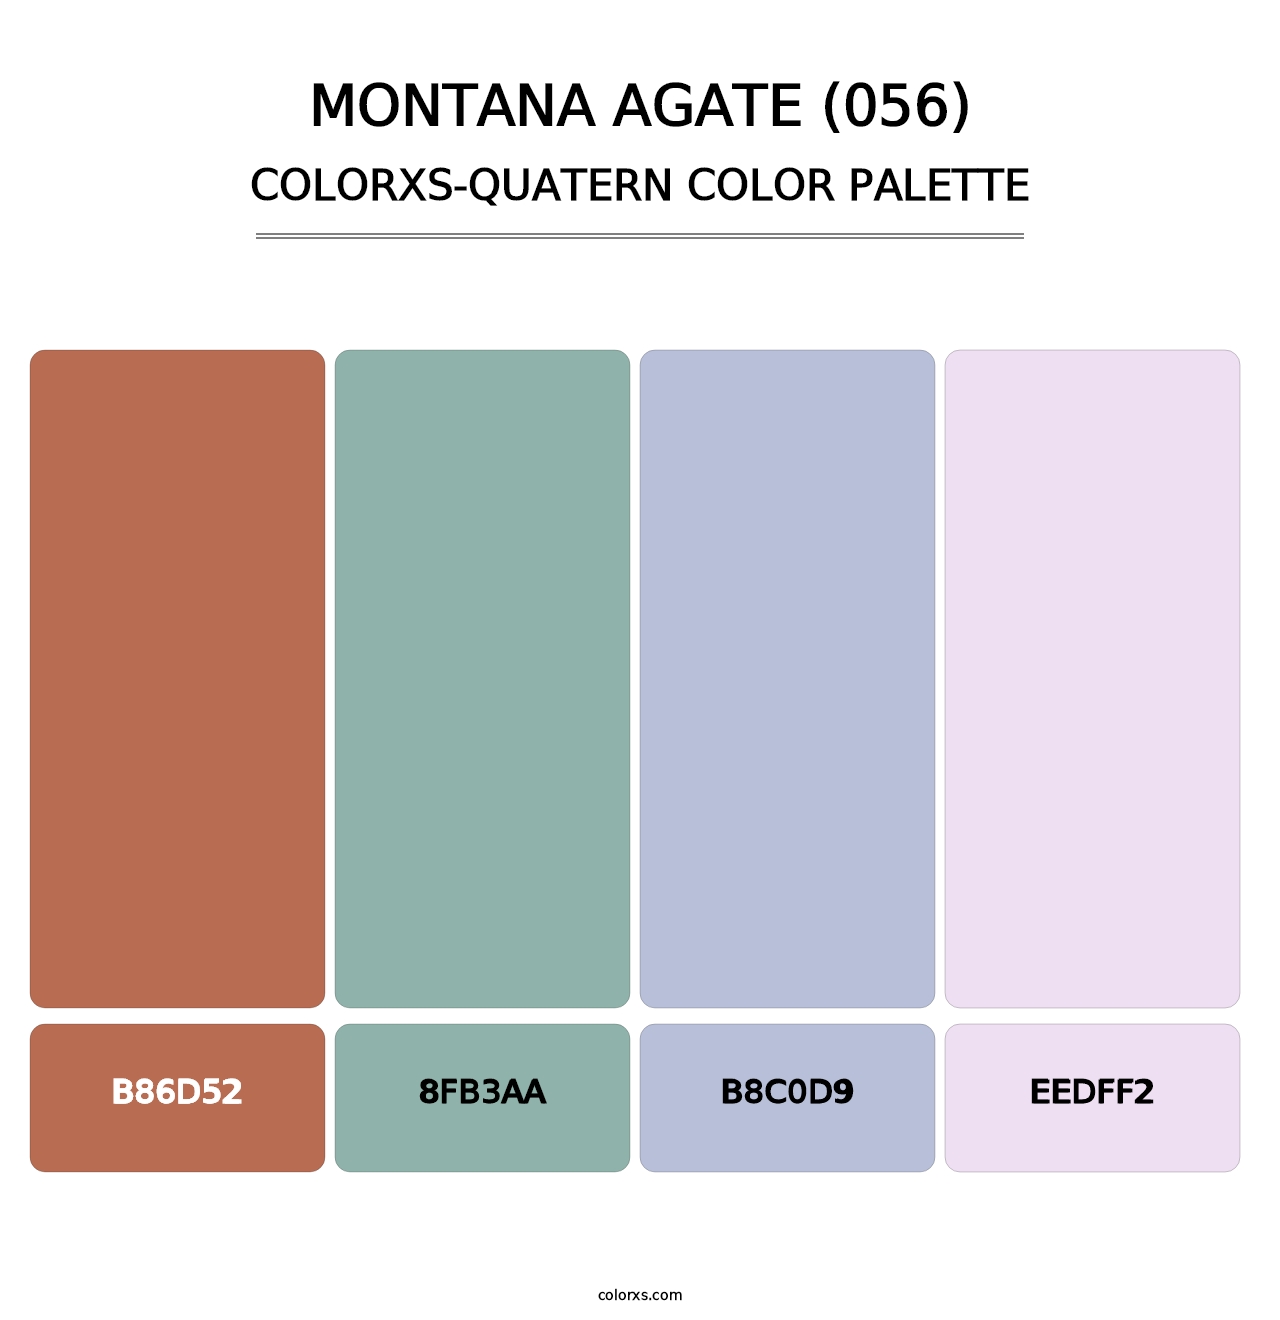 Montana Agate (056) - Colorxs Quatern Palette